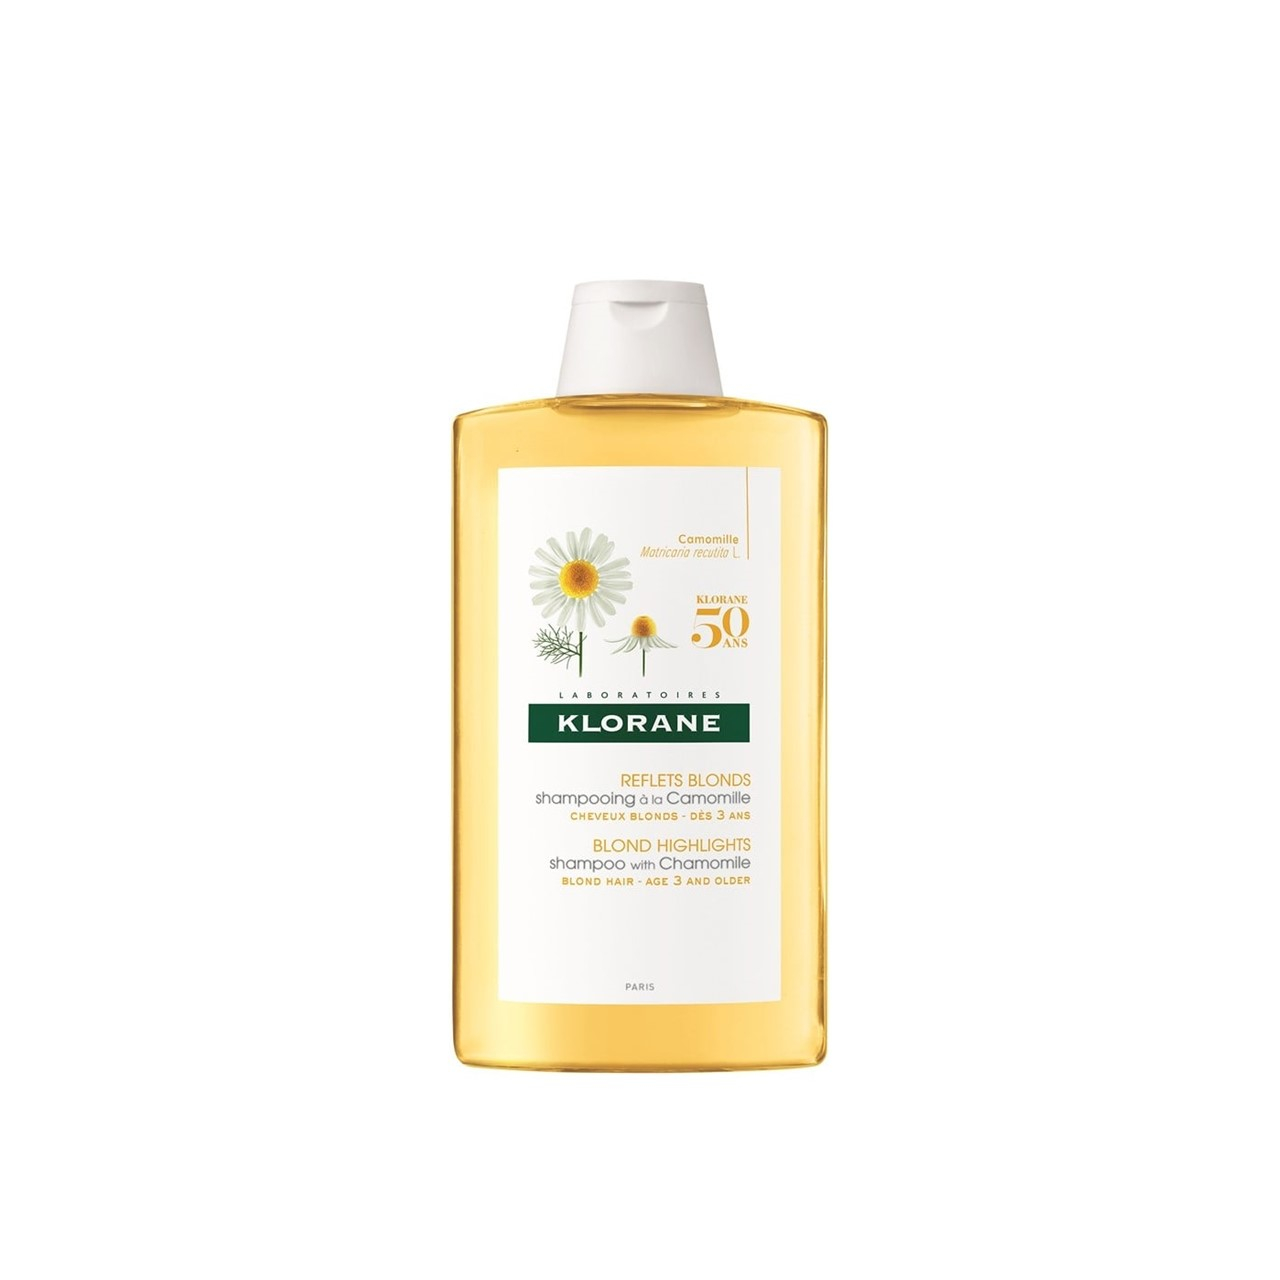 Klorane Blond Highlights Shampoo with Chamomile 200ml (6.76fl oz)